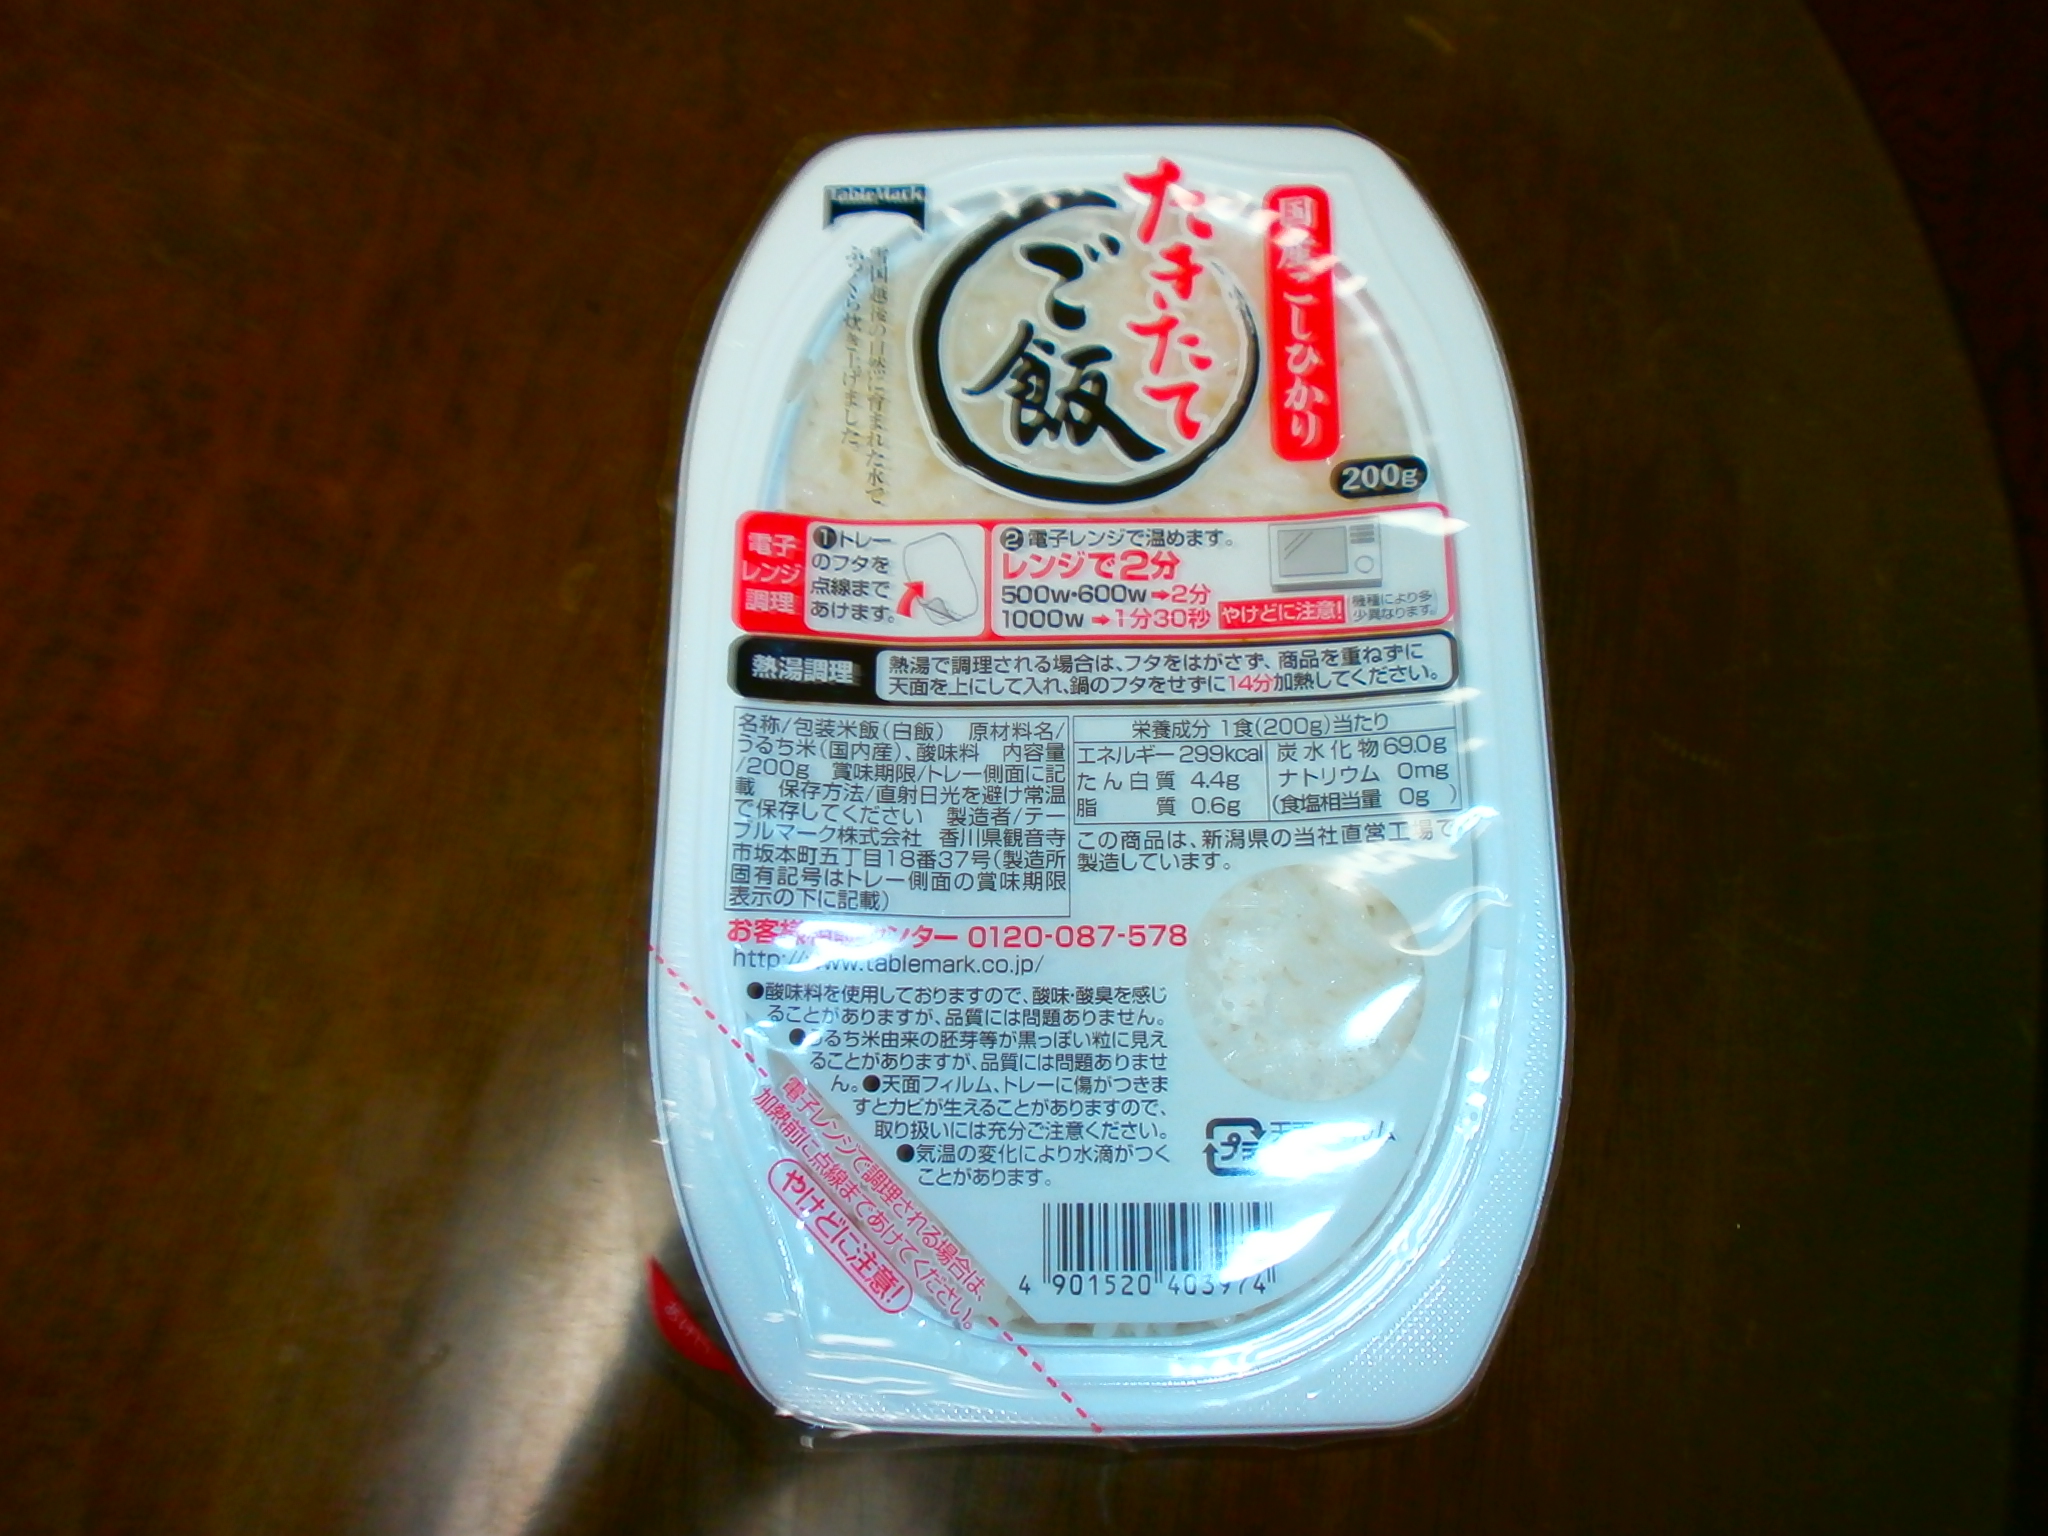 Taki fresh rice (table symbol)